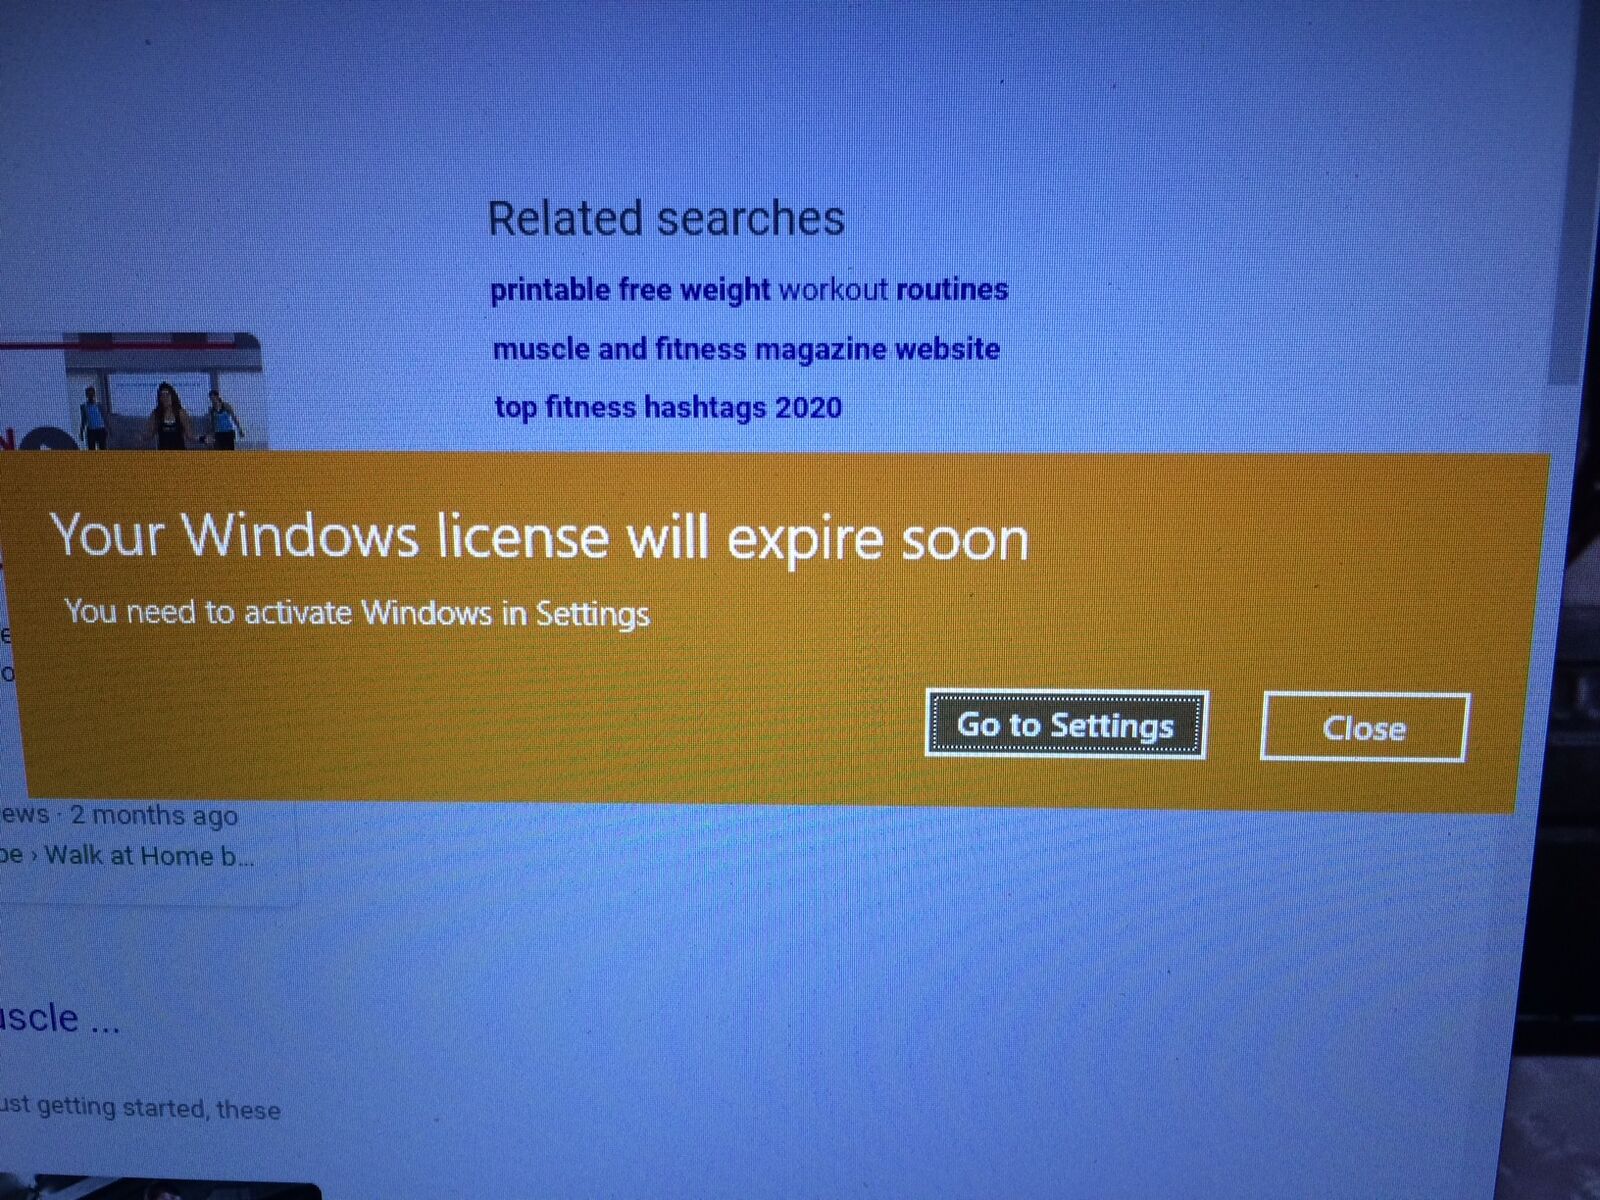 Windows License will expire soon 4cb907aa-7055-45e9-9fdf-699558abfe38?upload=true.jpg